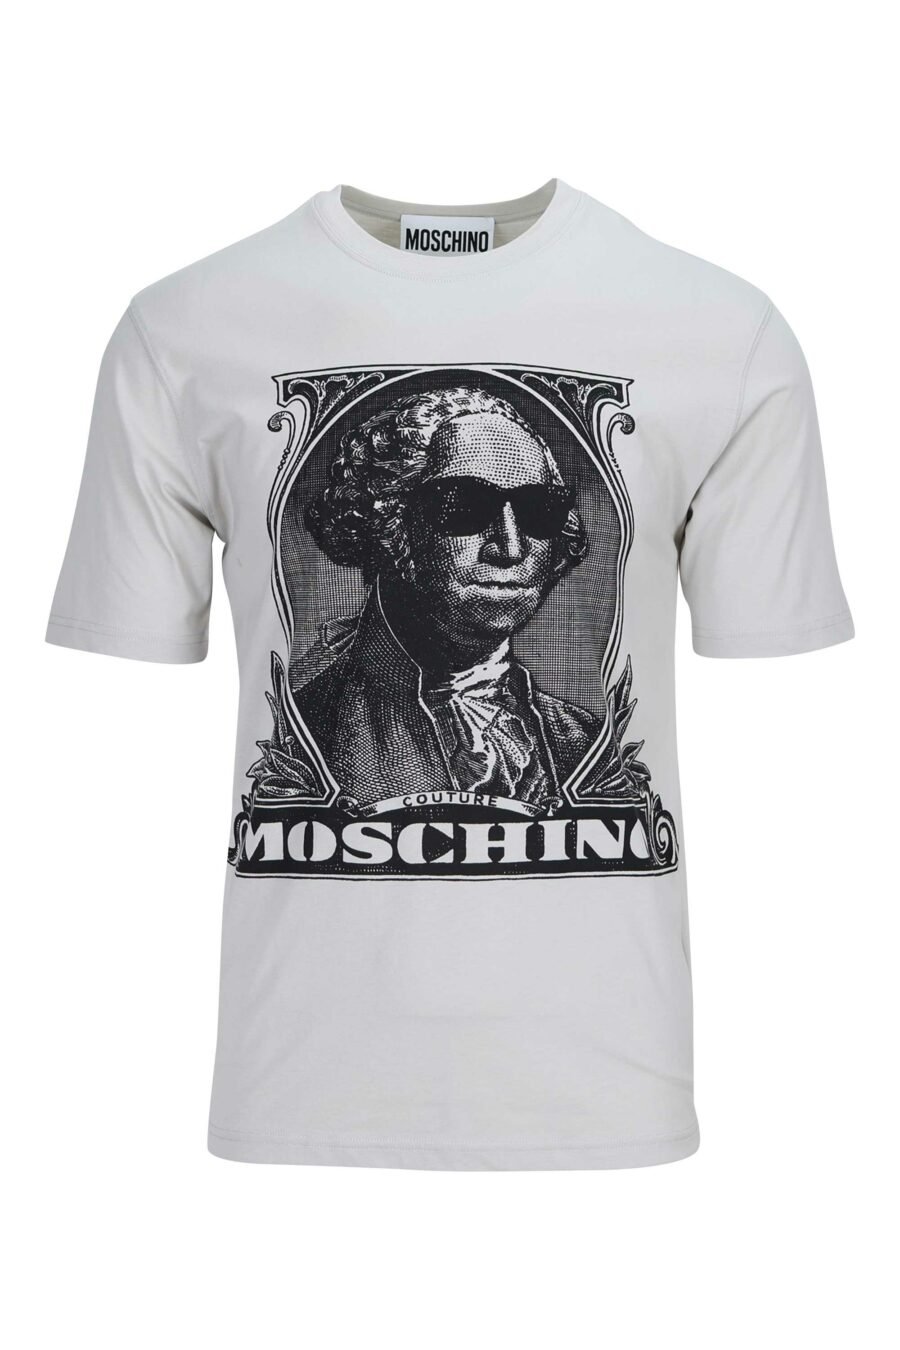 Camiseta gris con maxilogo "Moschino" billete - 889316954807